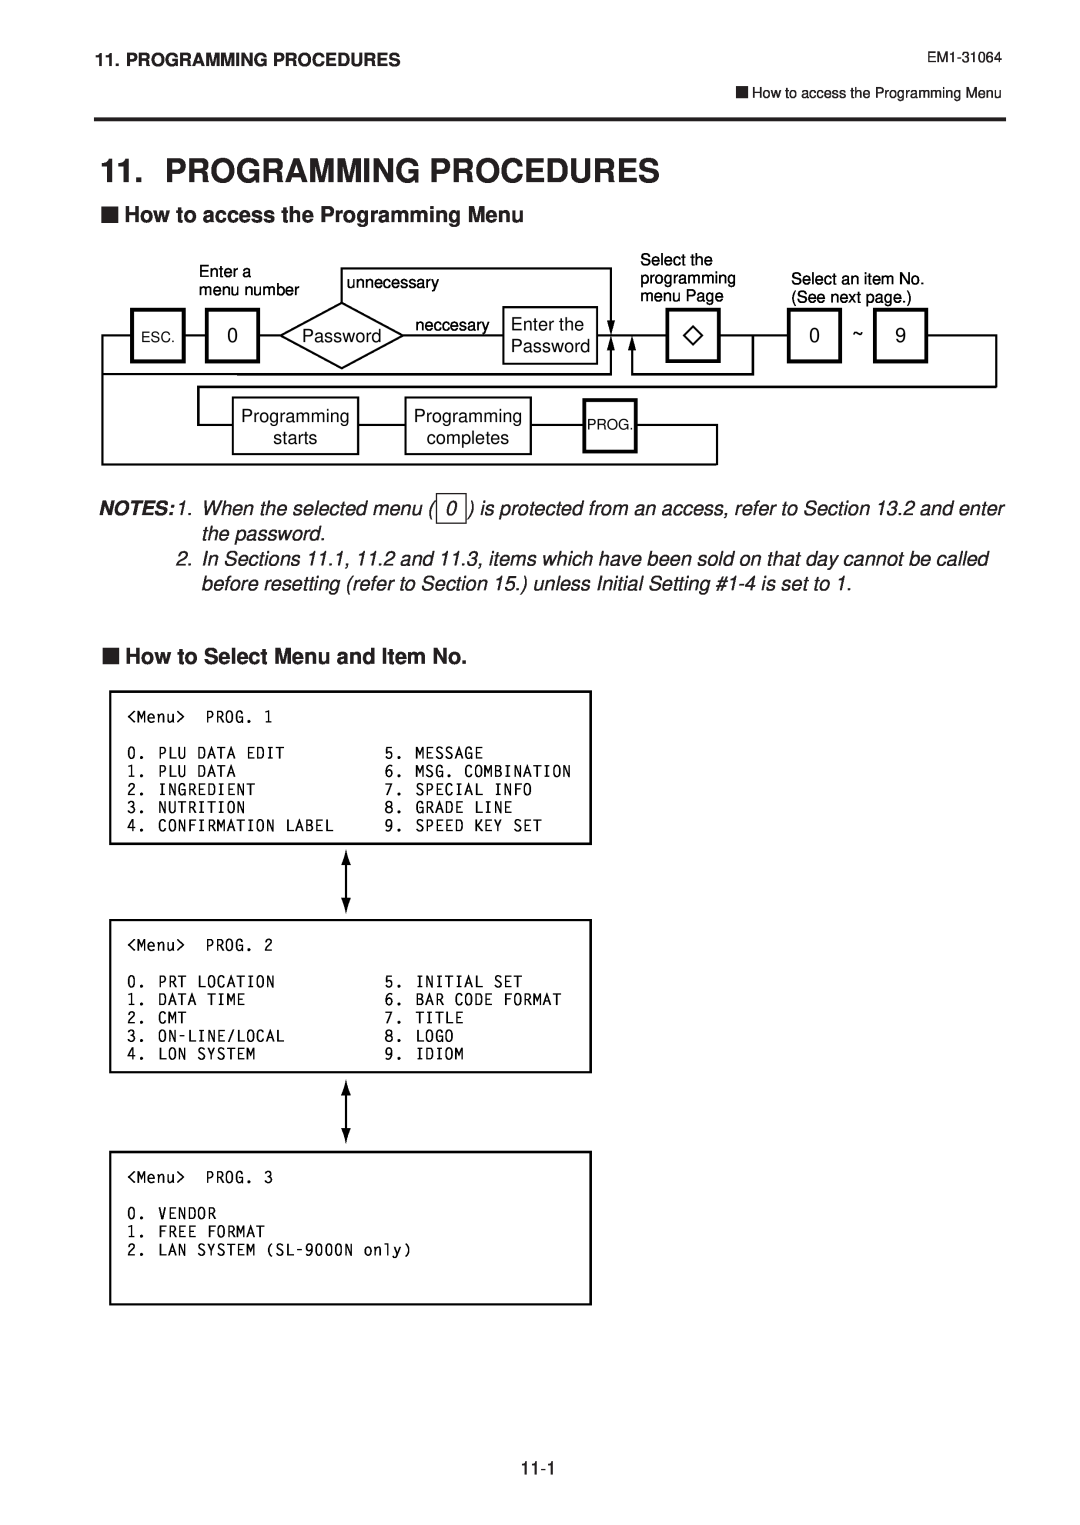 Toshiba EM1-31064, SL-9000N-FFB Programming Procedures, How to access the Programming Menu, How to Select Menu and Item No 